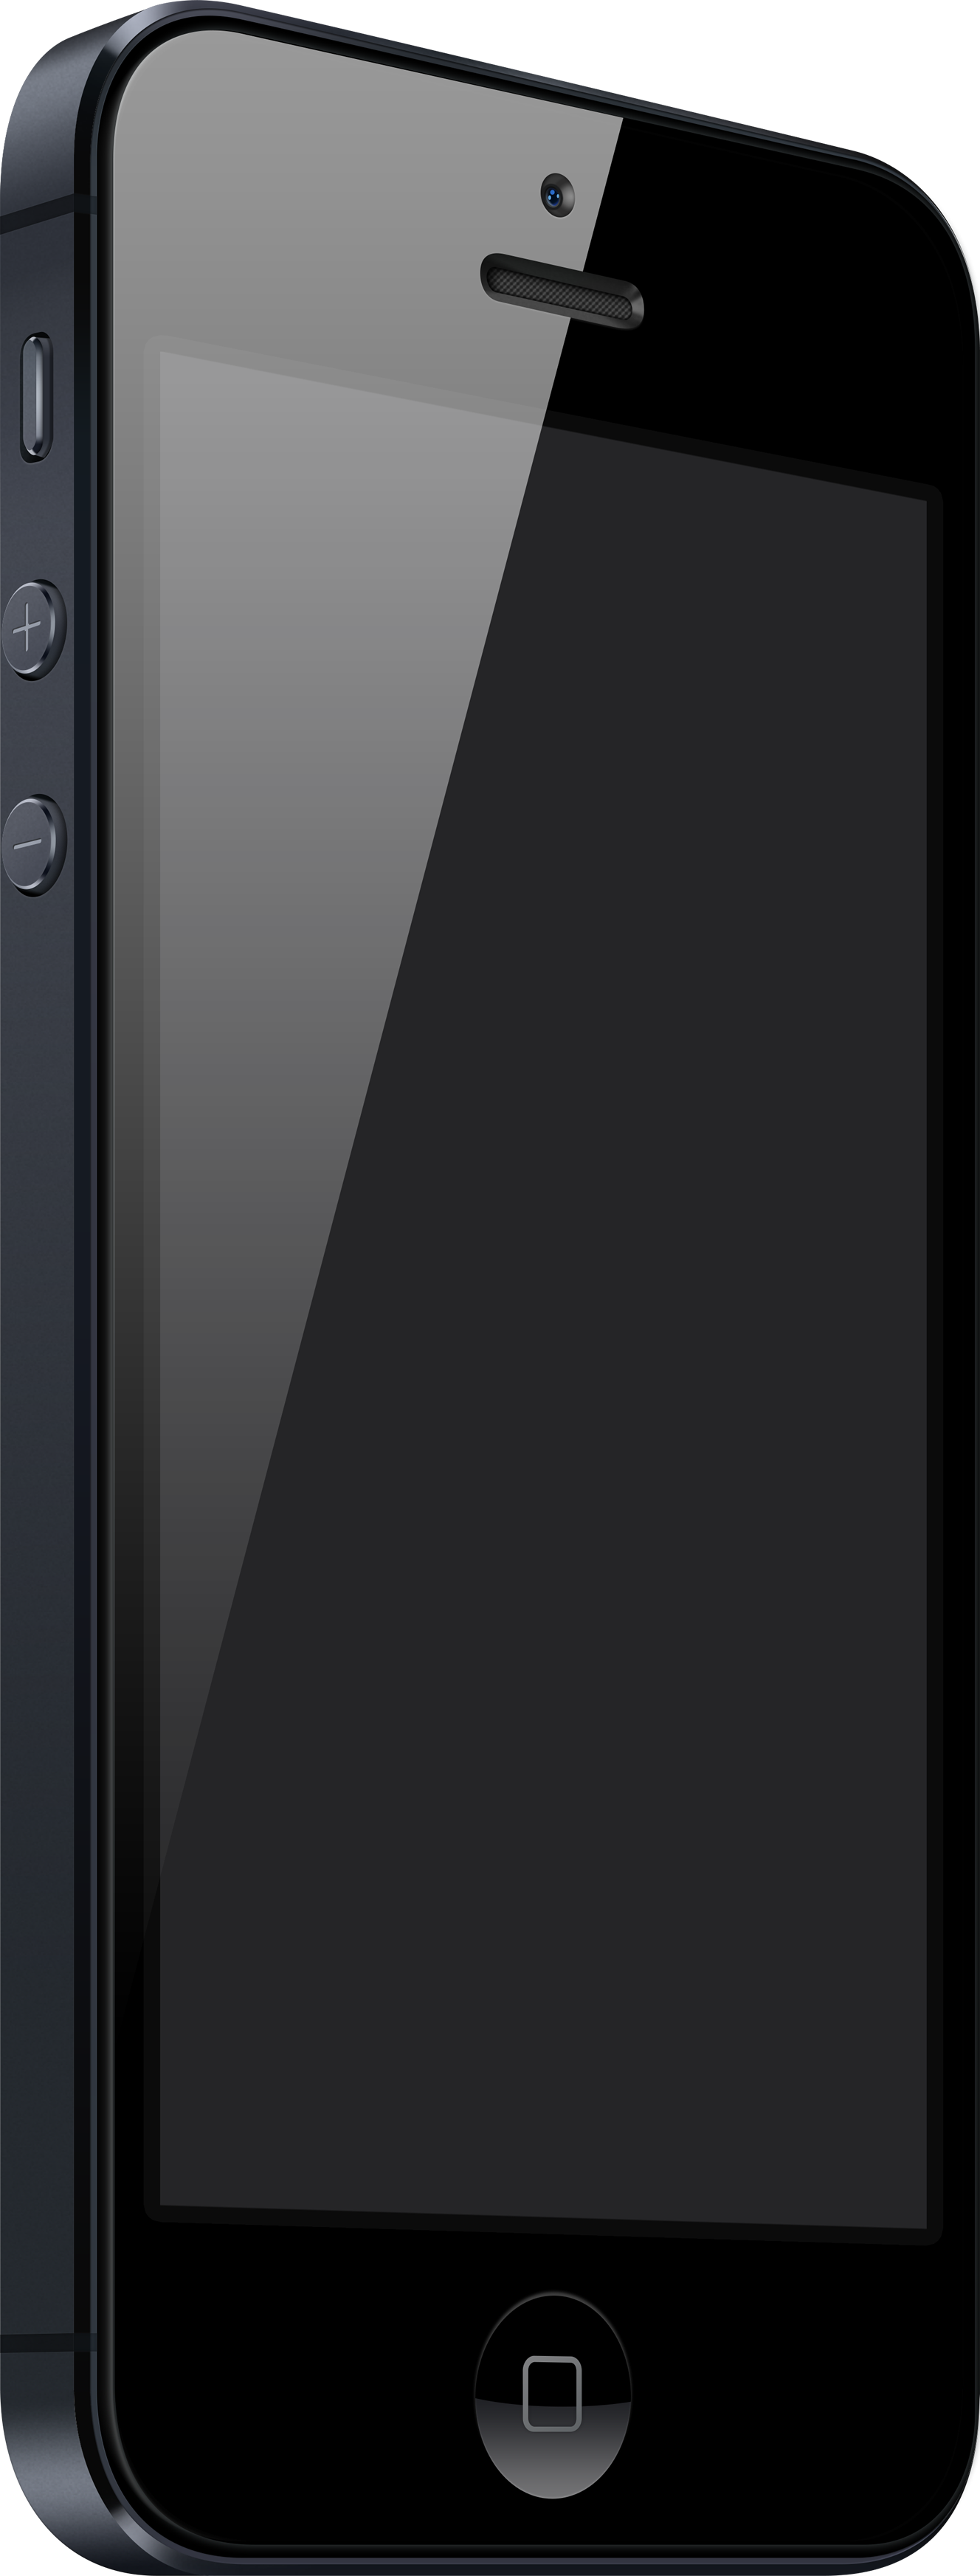 Black Iphone PNG Image